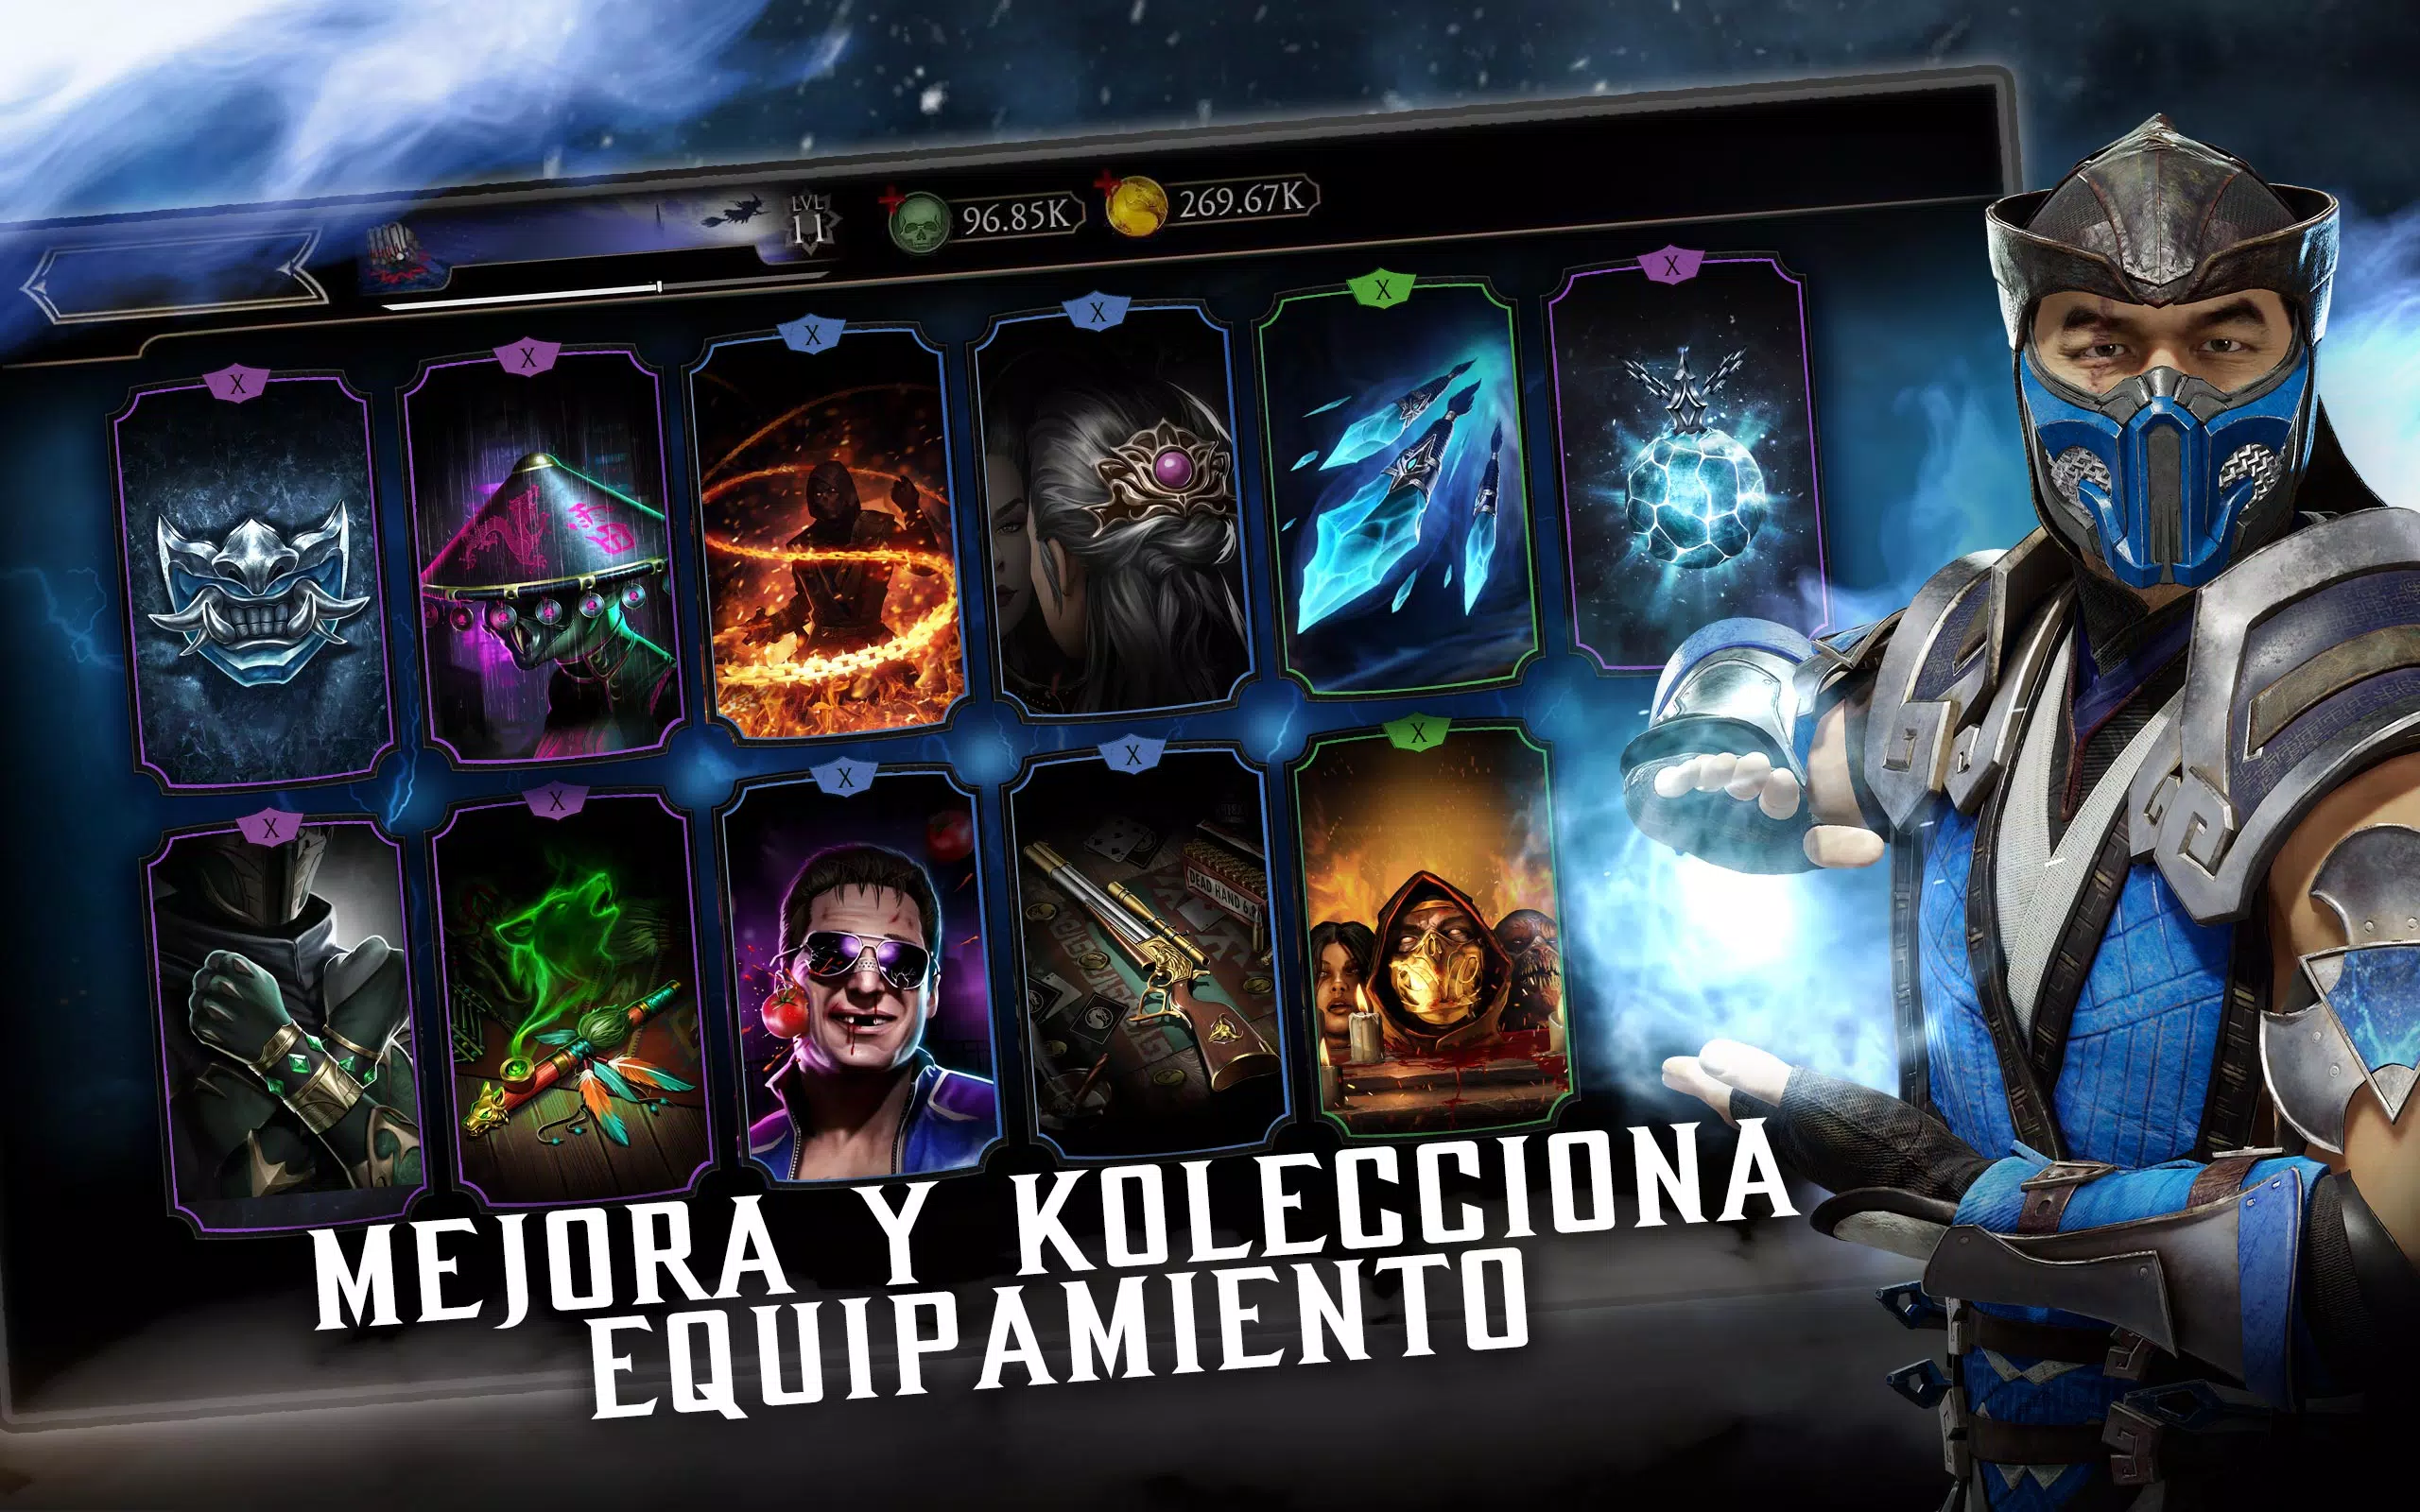 Descargar Mortal Kombat X 5.2 APK Gratis para Android